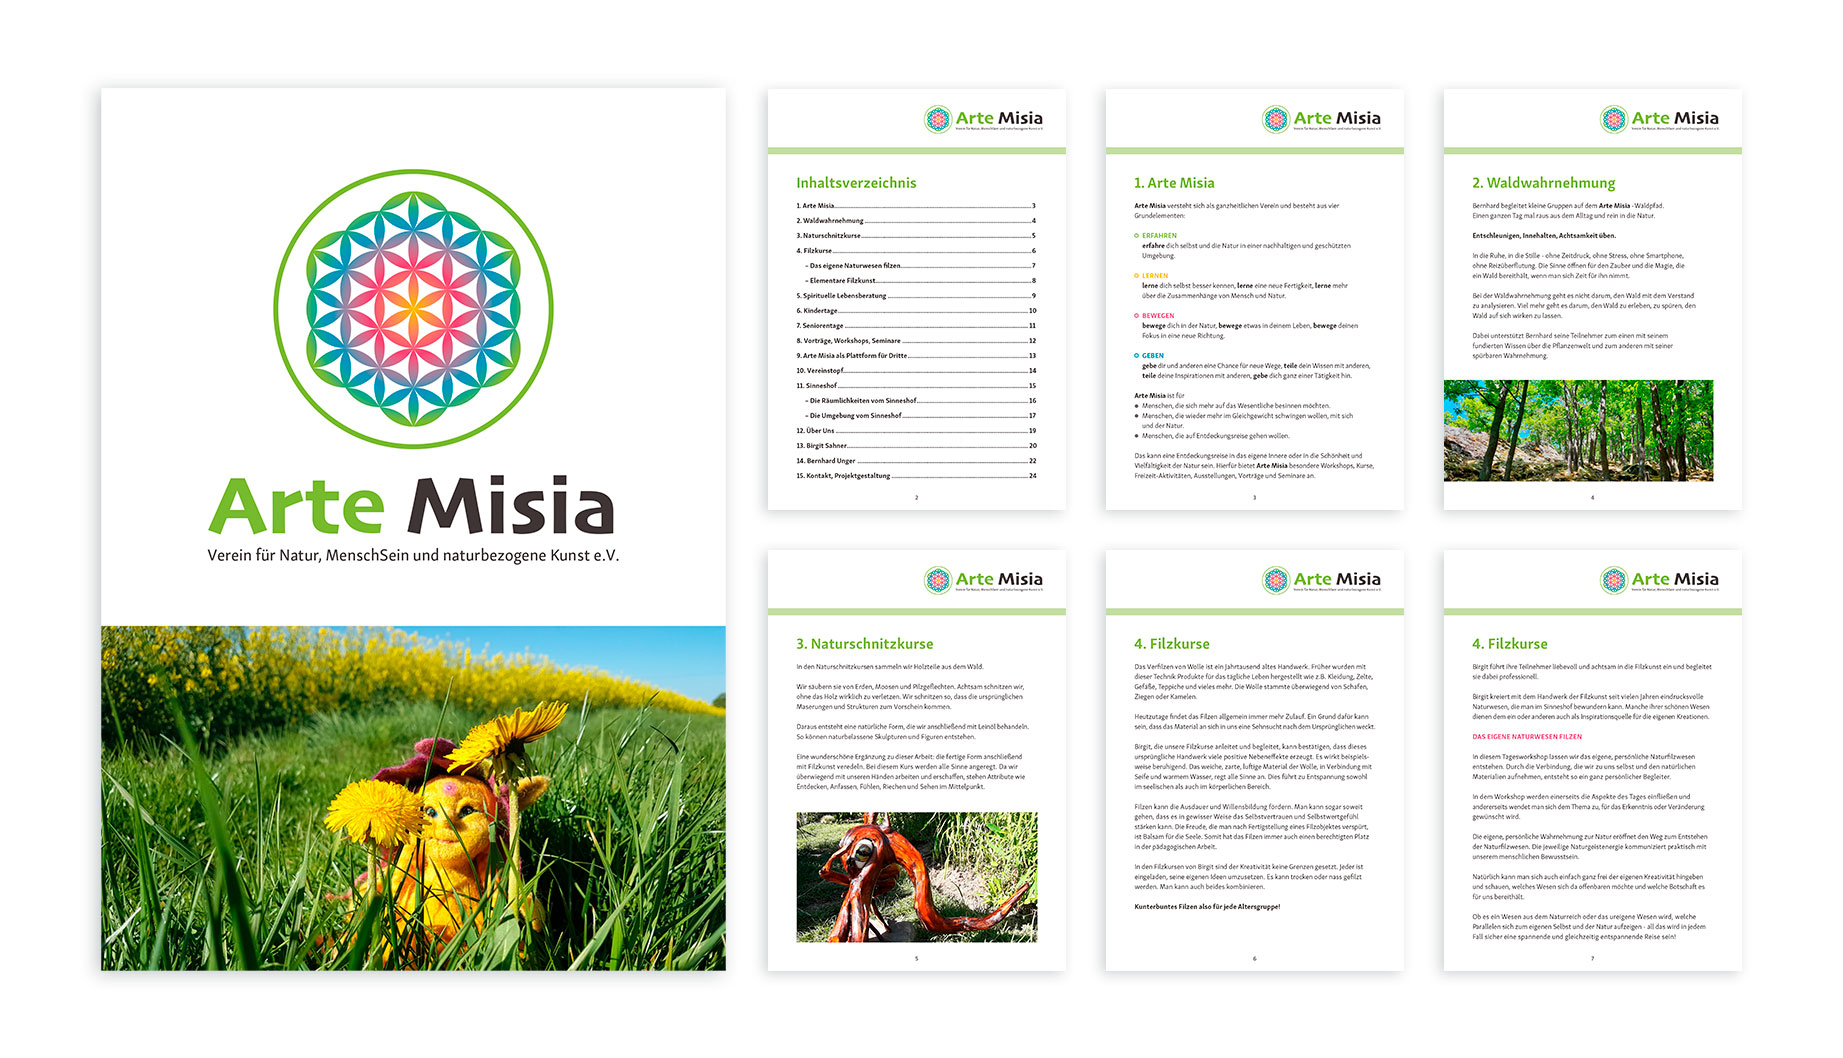 Arte Misia - Art Director - Corporate Identity - Corporate Text and Design - Brand Concept - Final Art